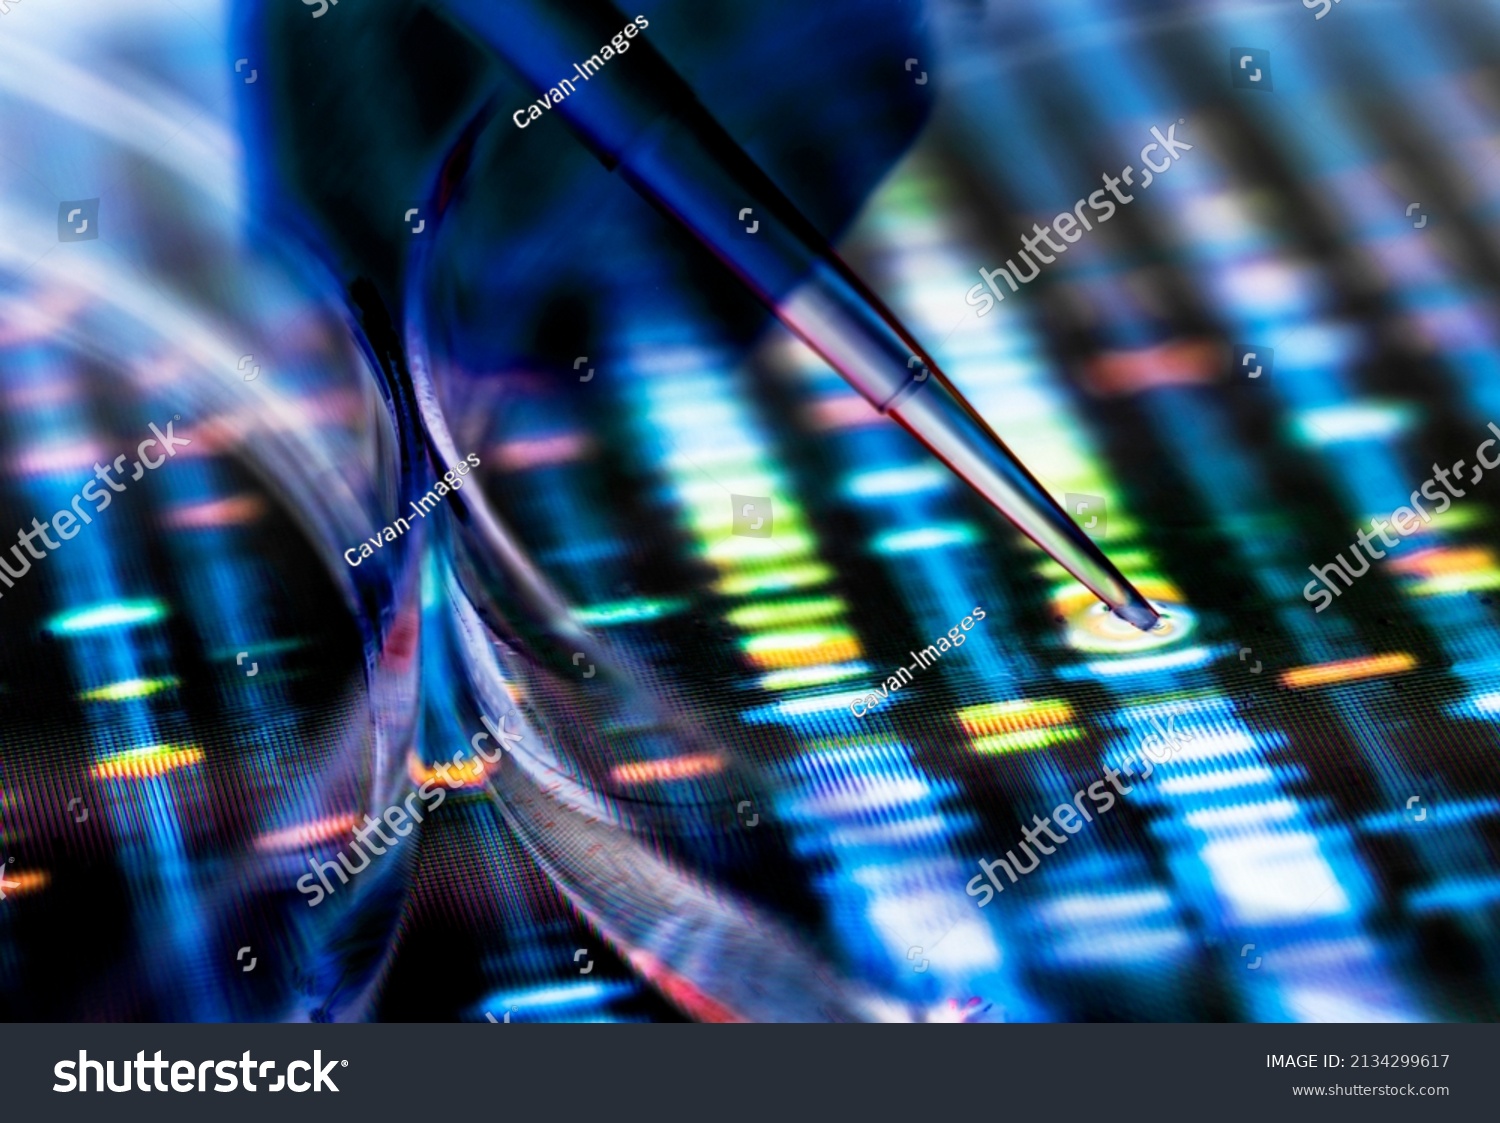 Conceptual image illustrating DNA gene editing #2134299617